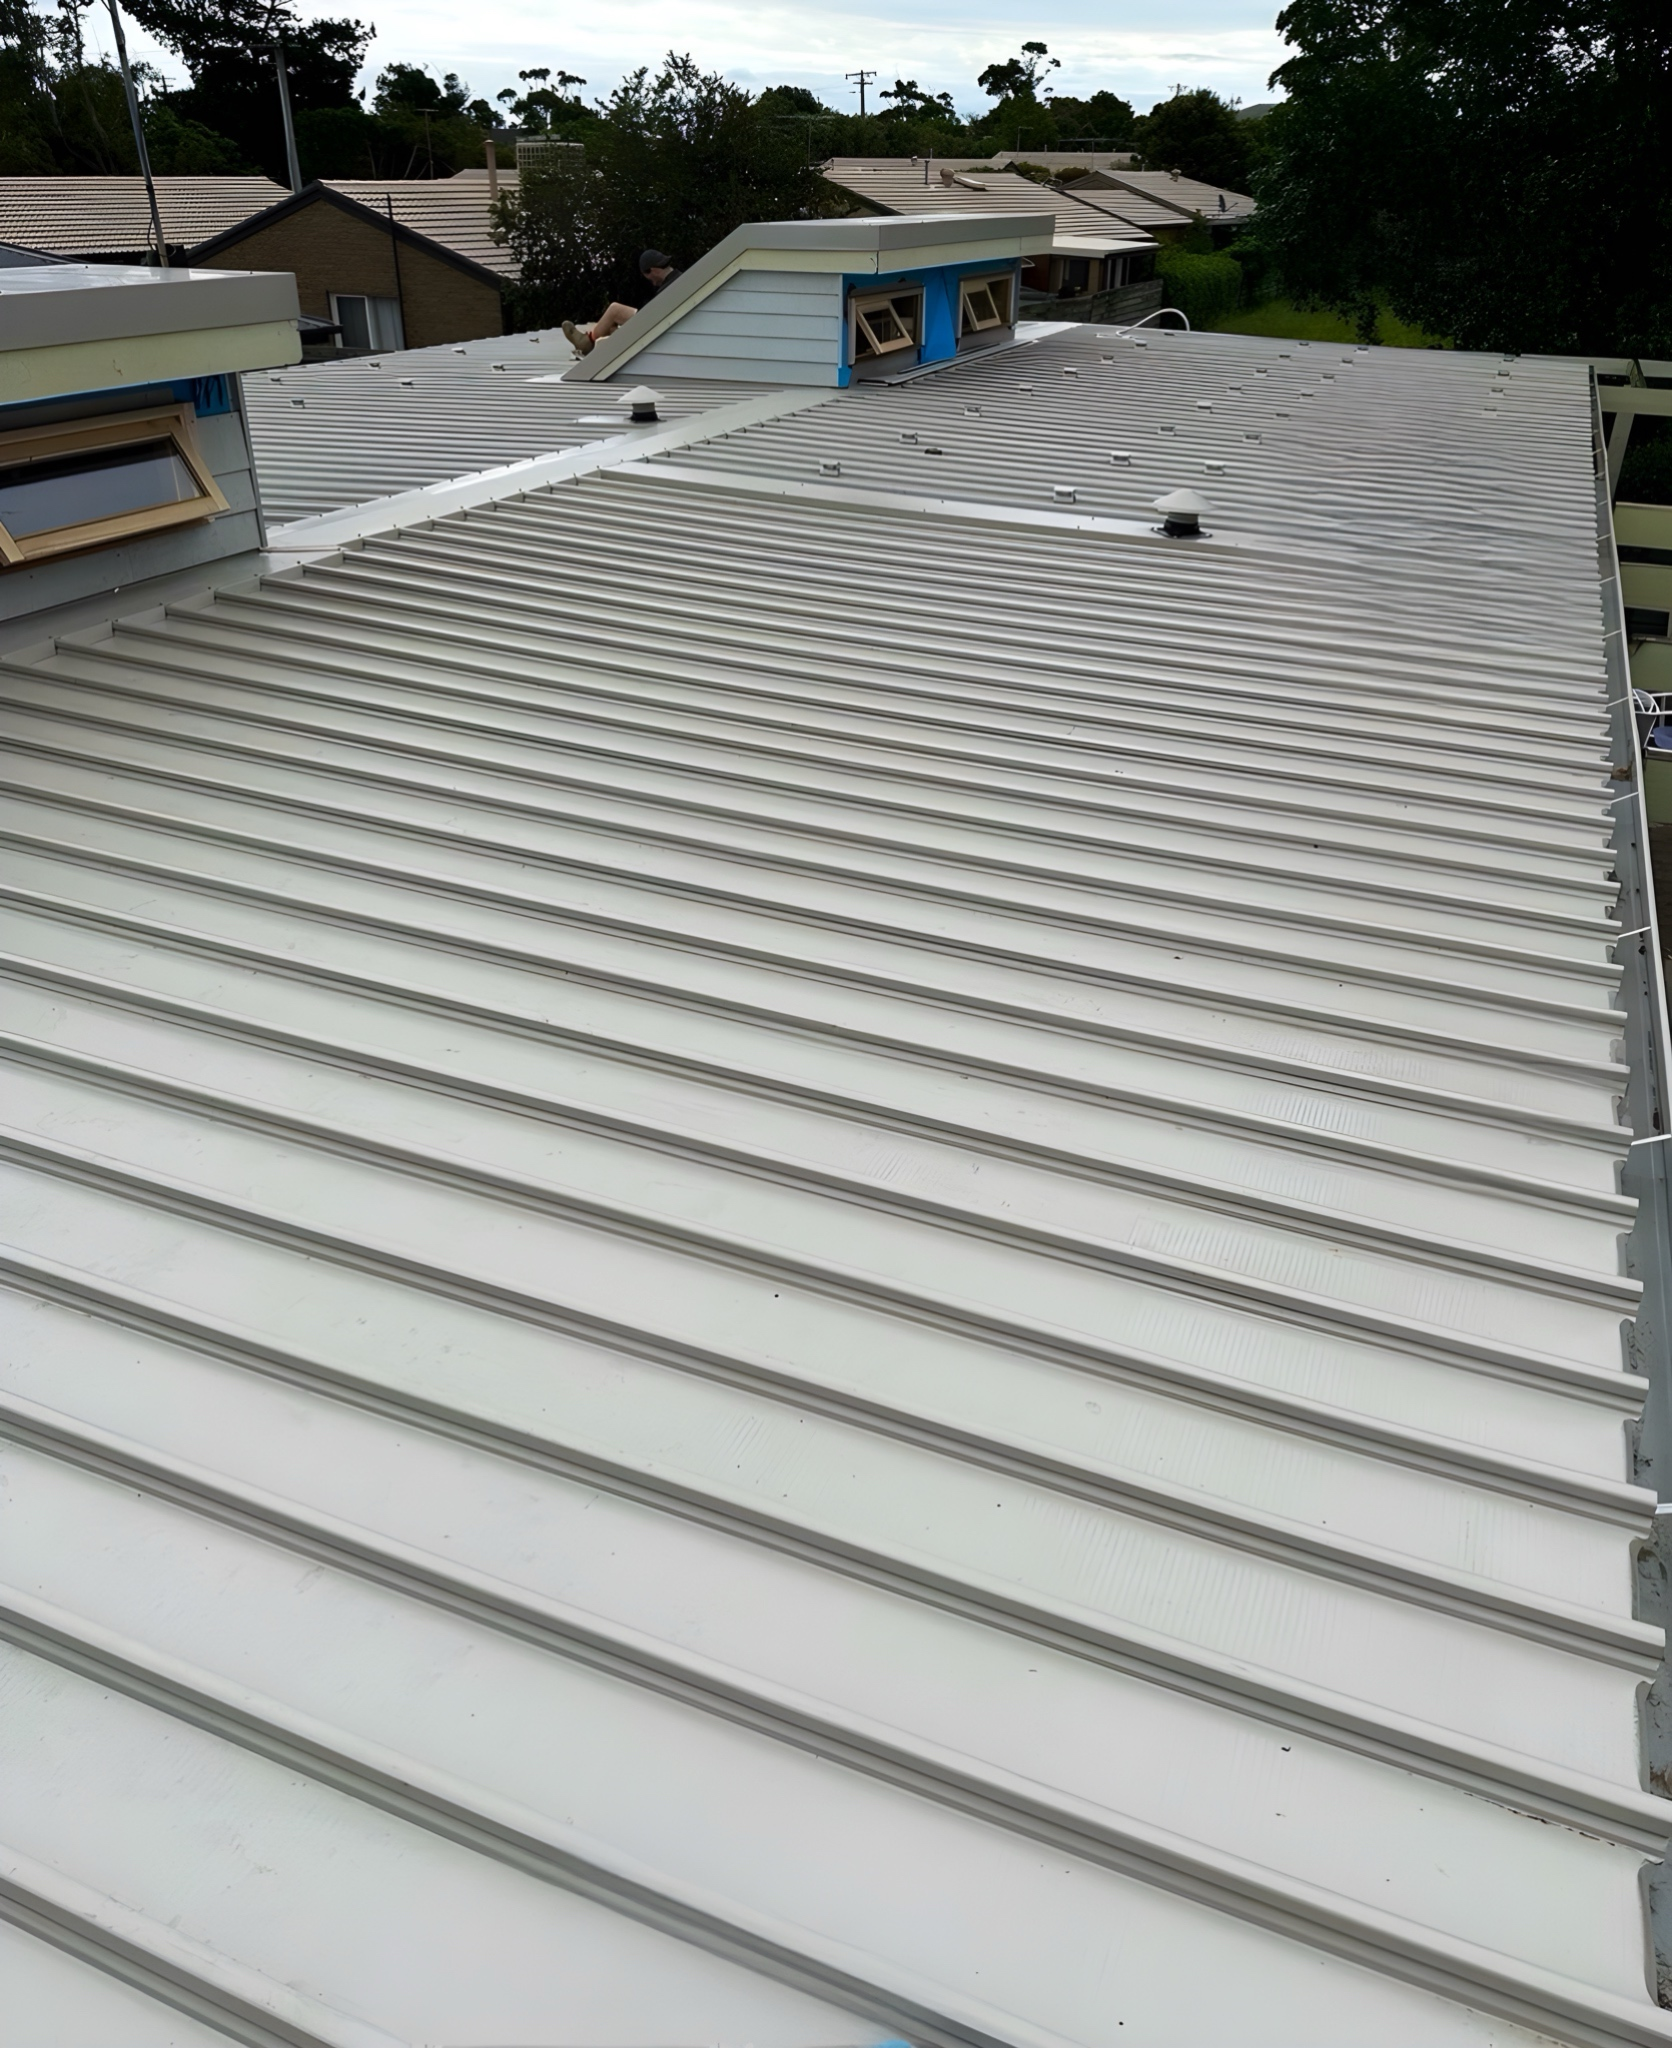 The flat pans of Klip Lok 700 roofing 